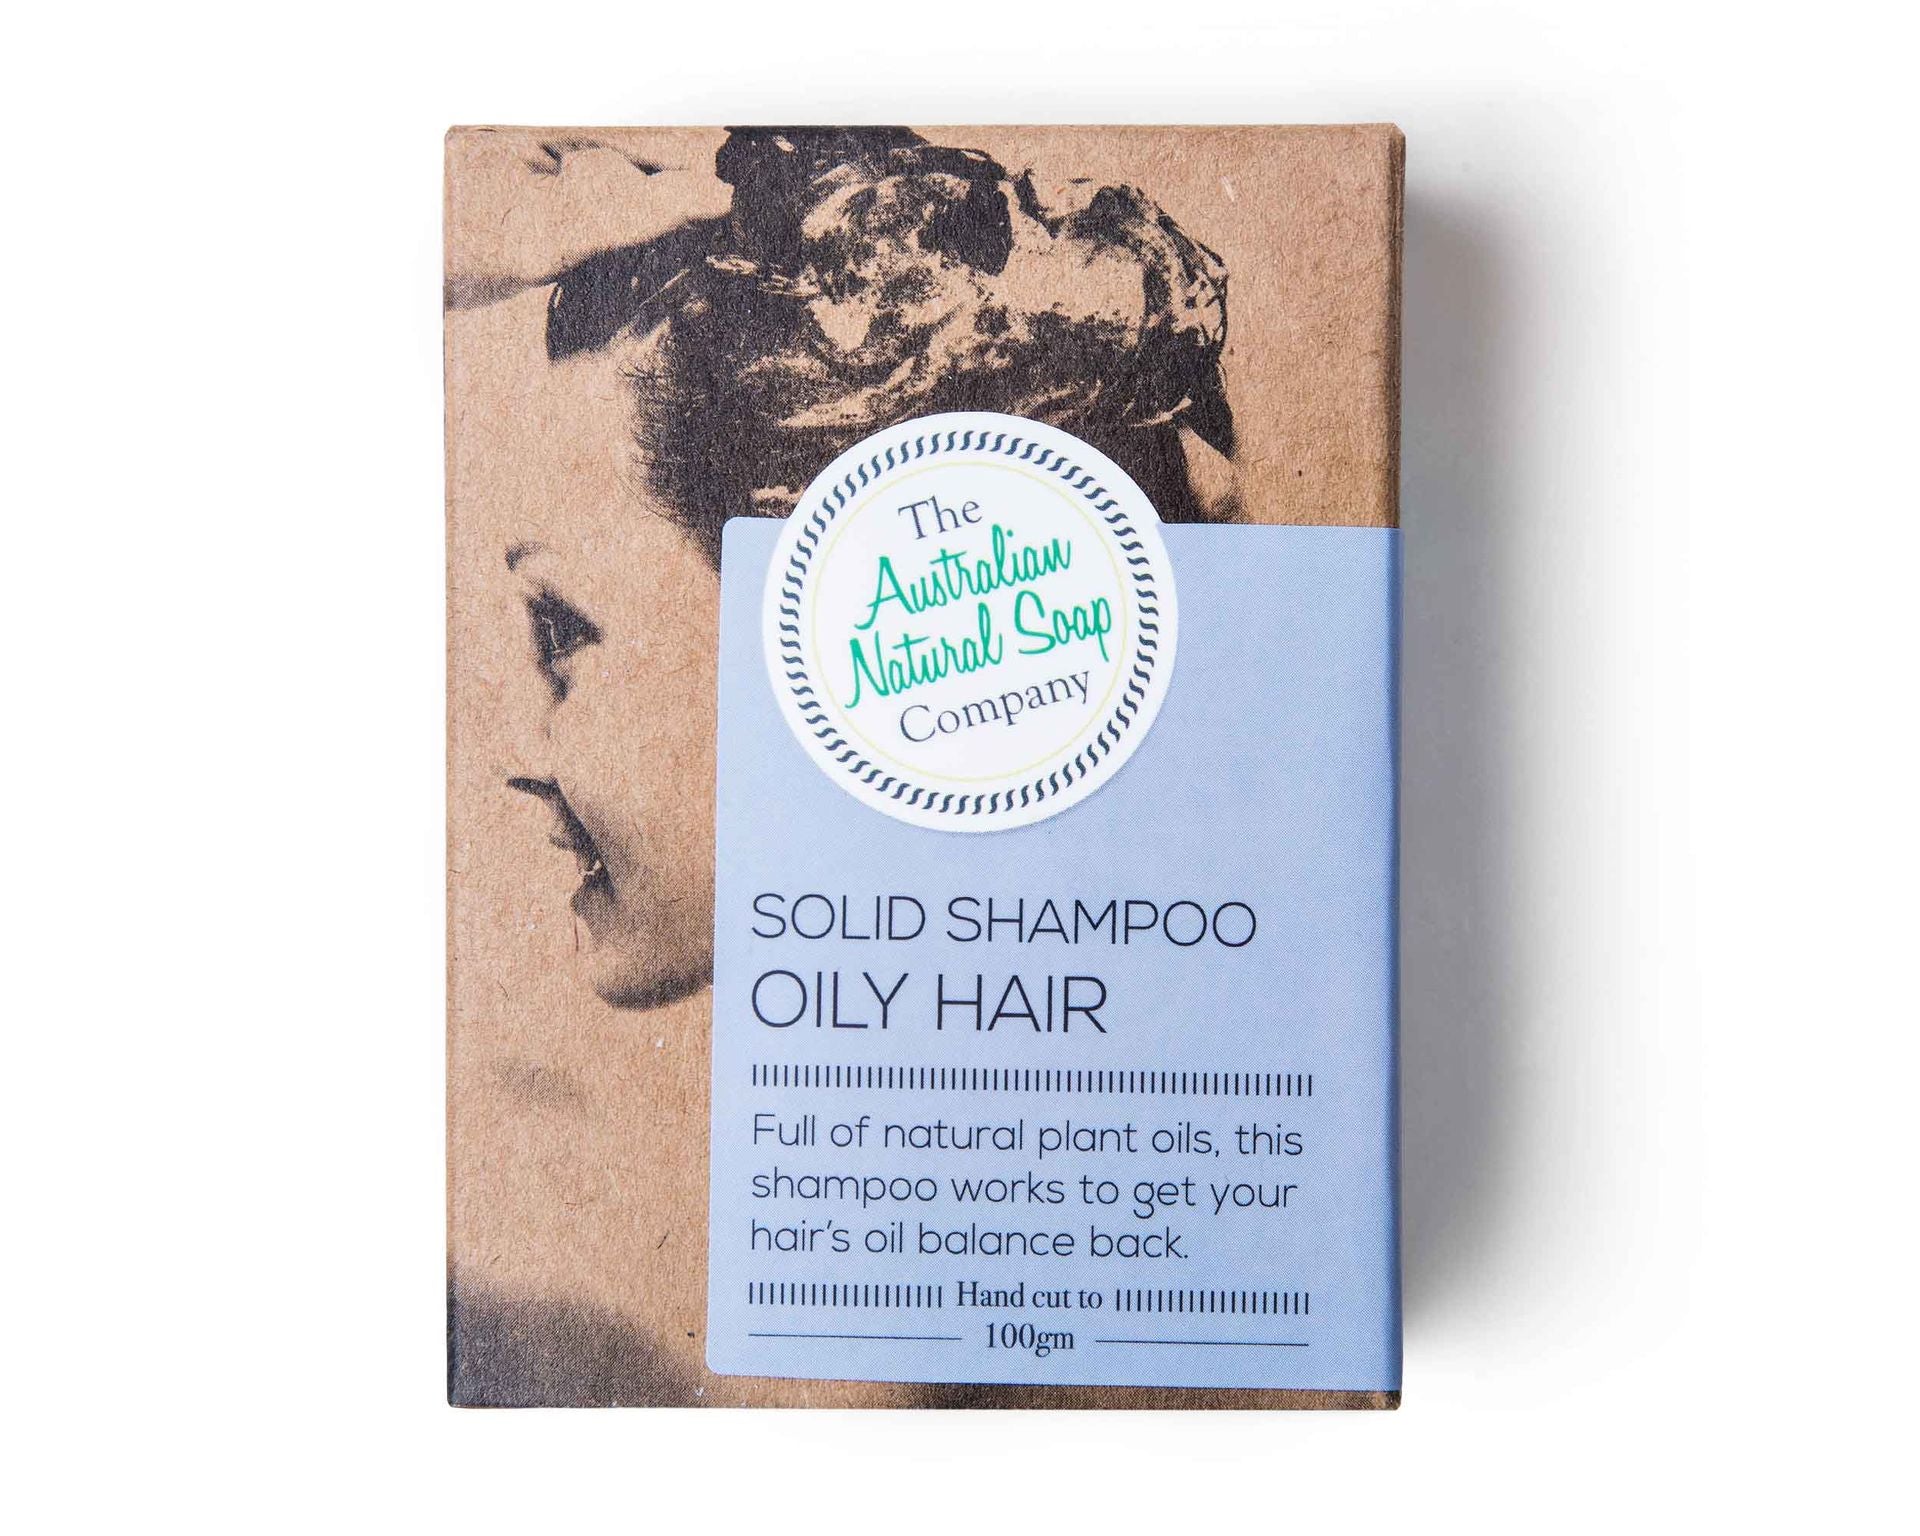 Australian Natural Soap Company shampoo bar for oily hair front of box